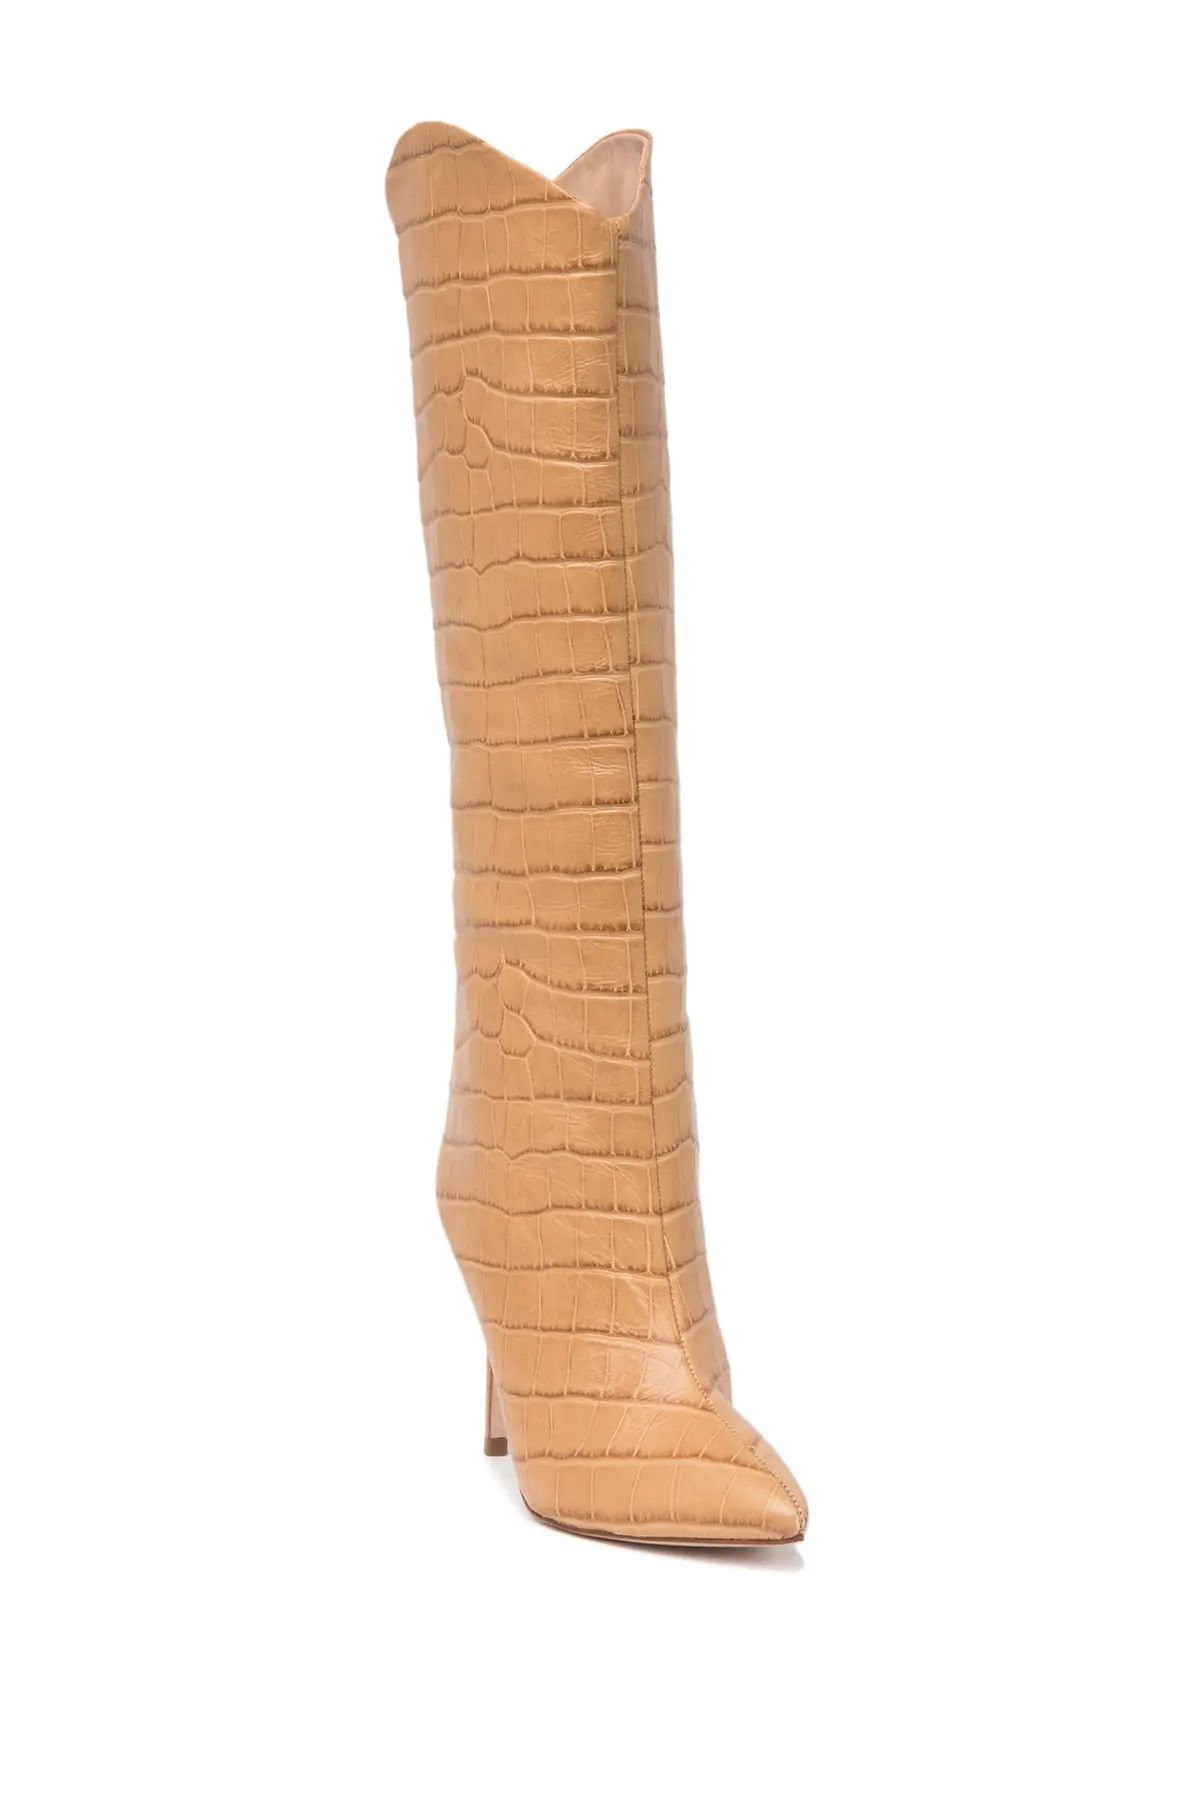 Schutz Maryana Croc-Embossed Leather Knee High Boot at Nordstrom Rack | Nordstrom Rack